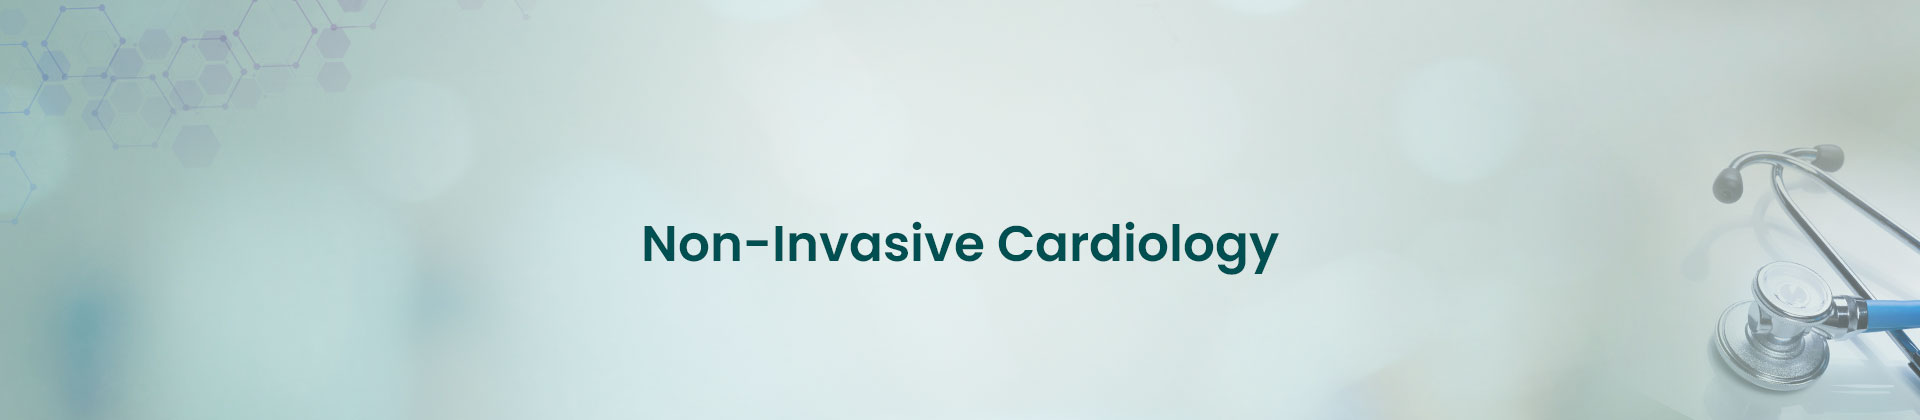 Non-Invasive Cardiology